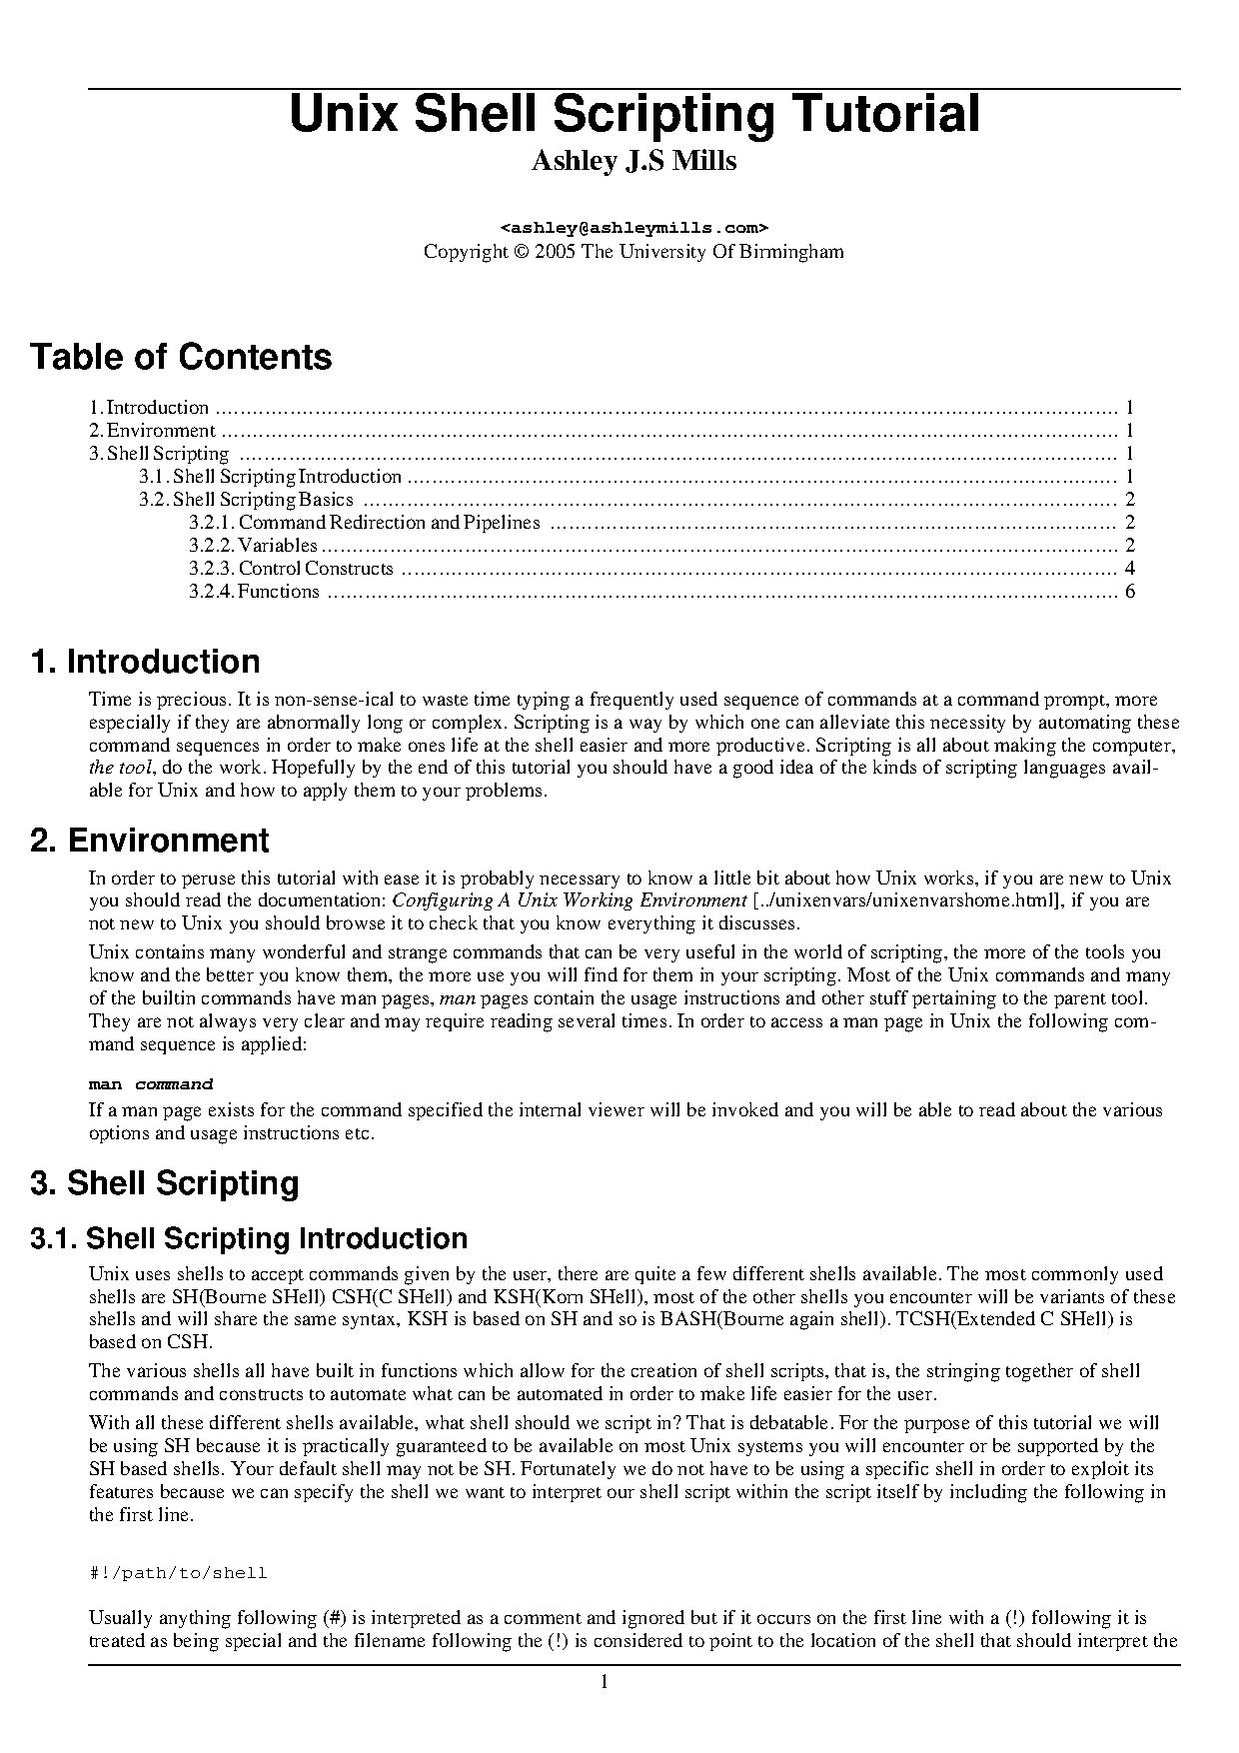 Unixscripting.pdf